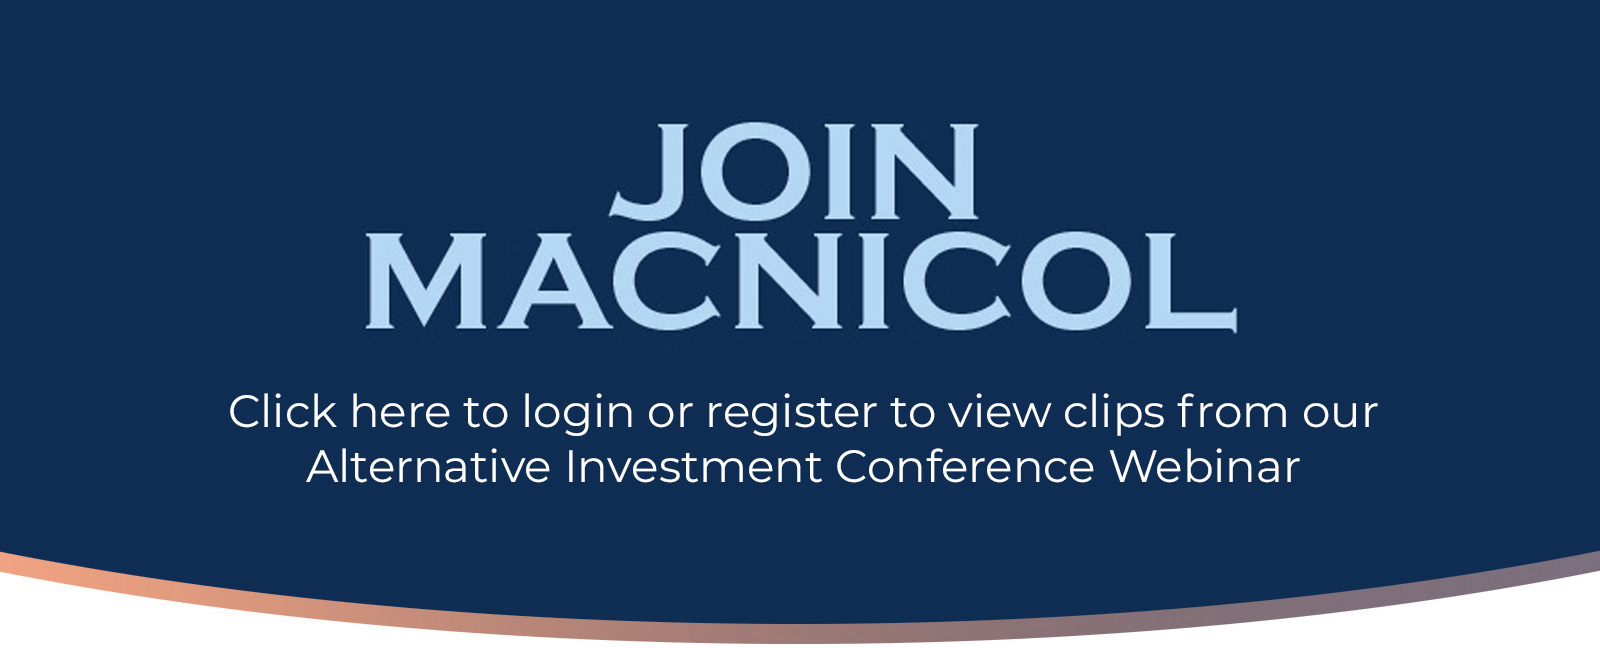 Join Macnicol - Alternative Investment Conference Webinar